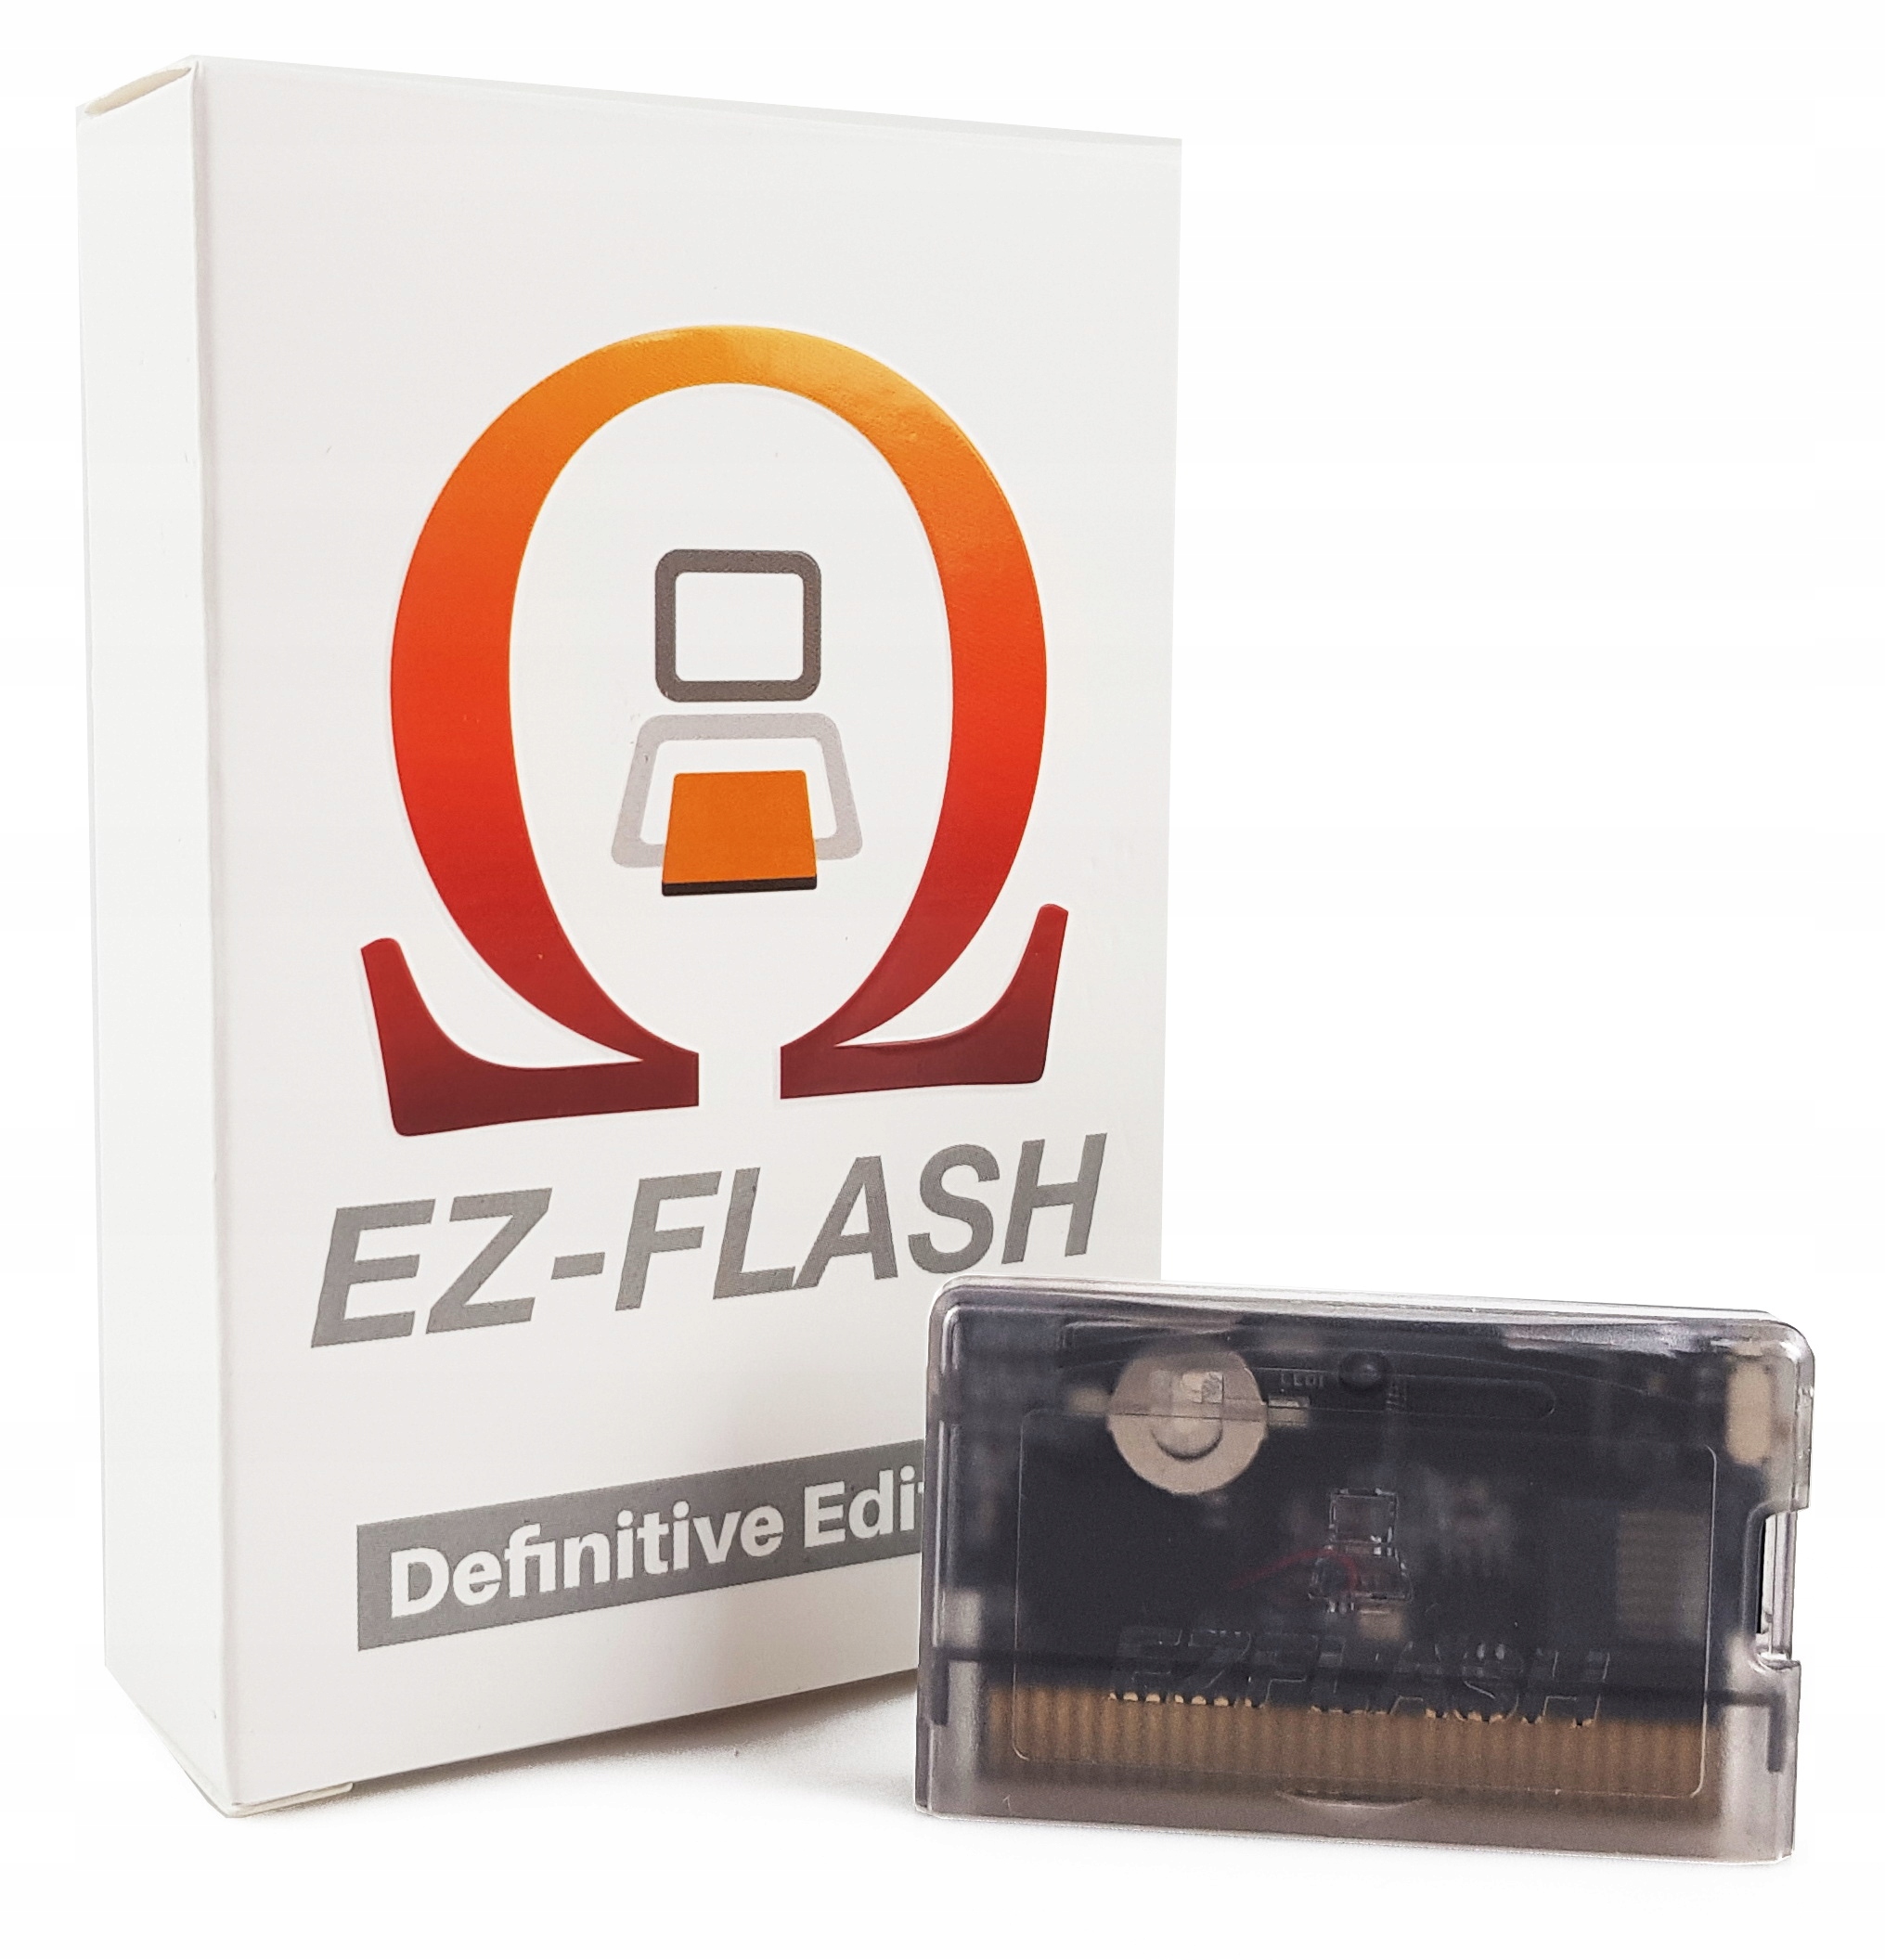 EZ-FLASH OMEGA DEFINITIVE EDITION DO GBA DS LITE EAN (GTIN) 5903802415995